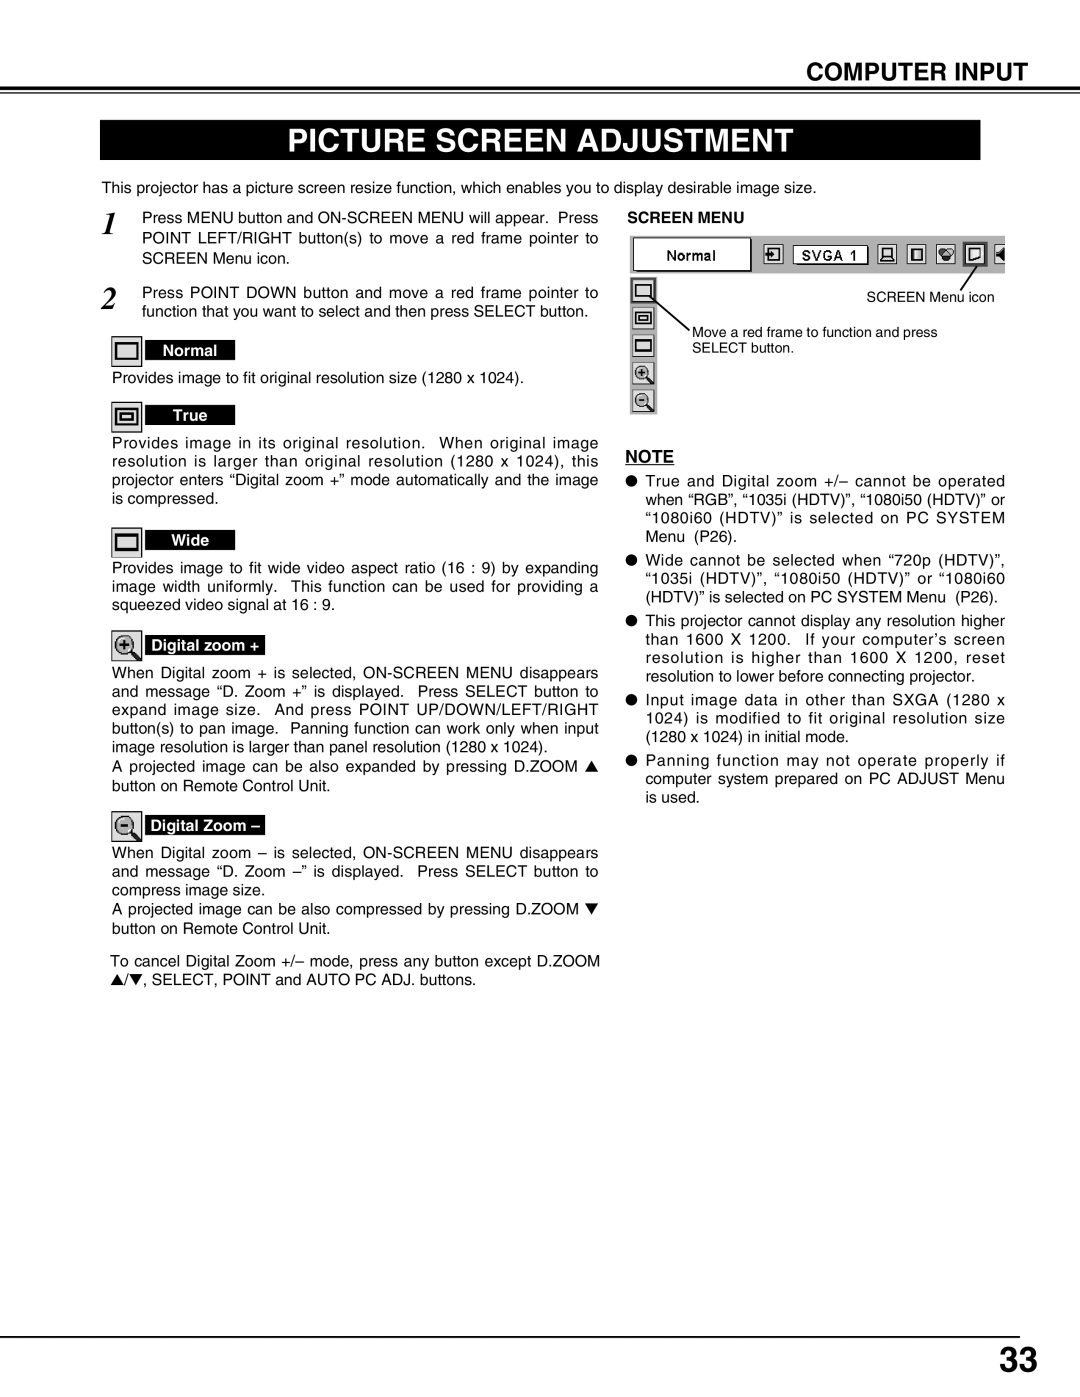 Eiki LC-SX4LA instruction manual Picture Screen Adjustment, Computer Input, Screen Menu 